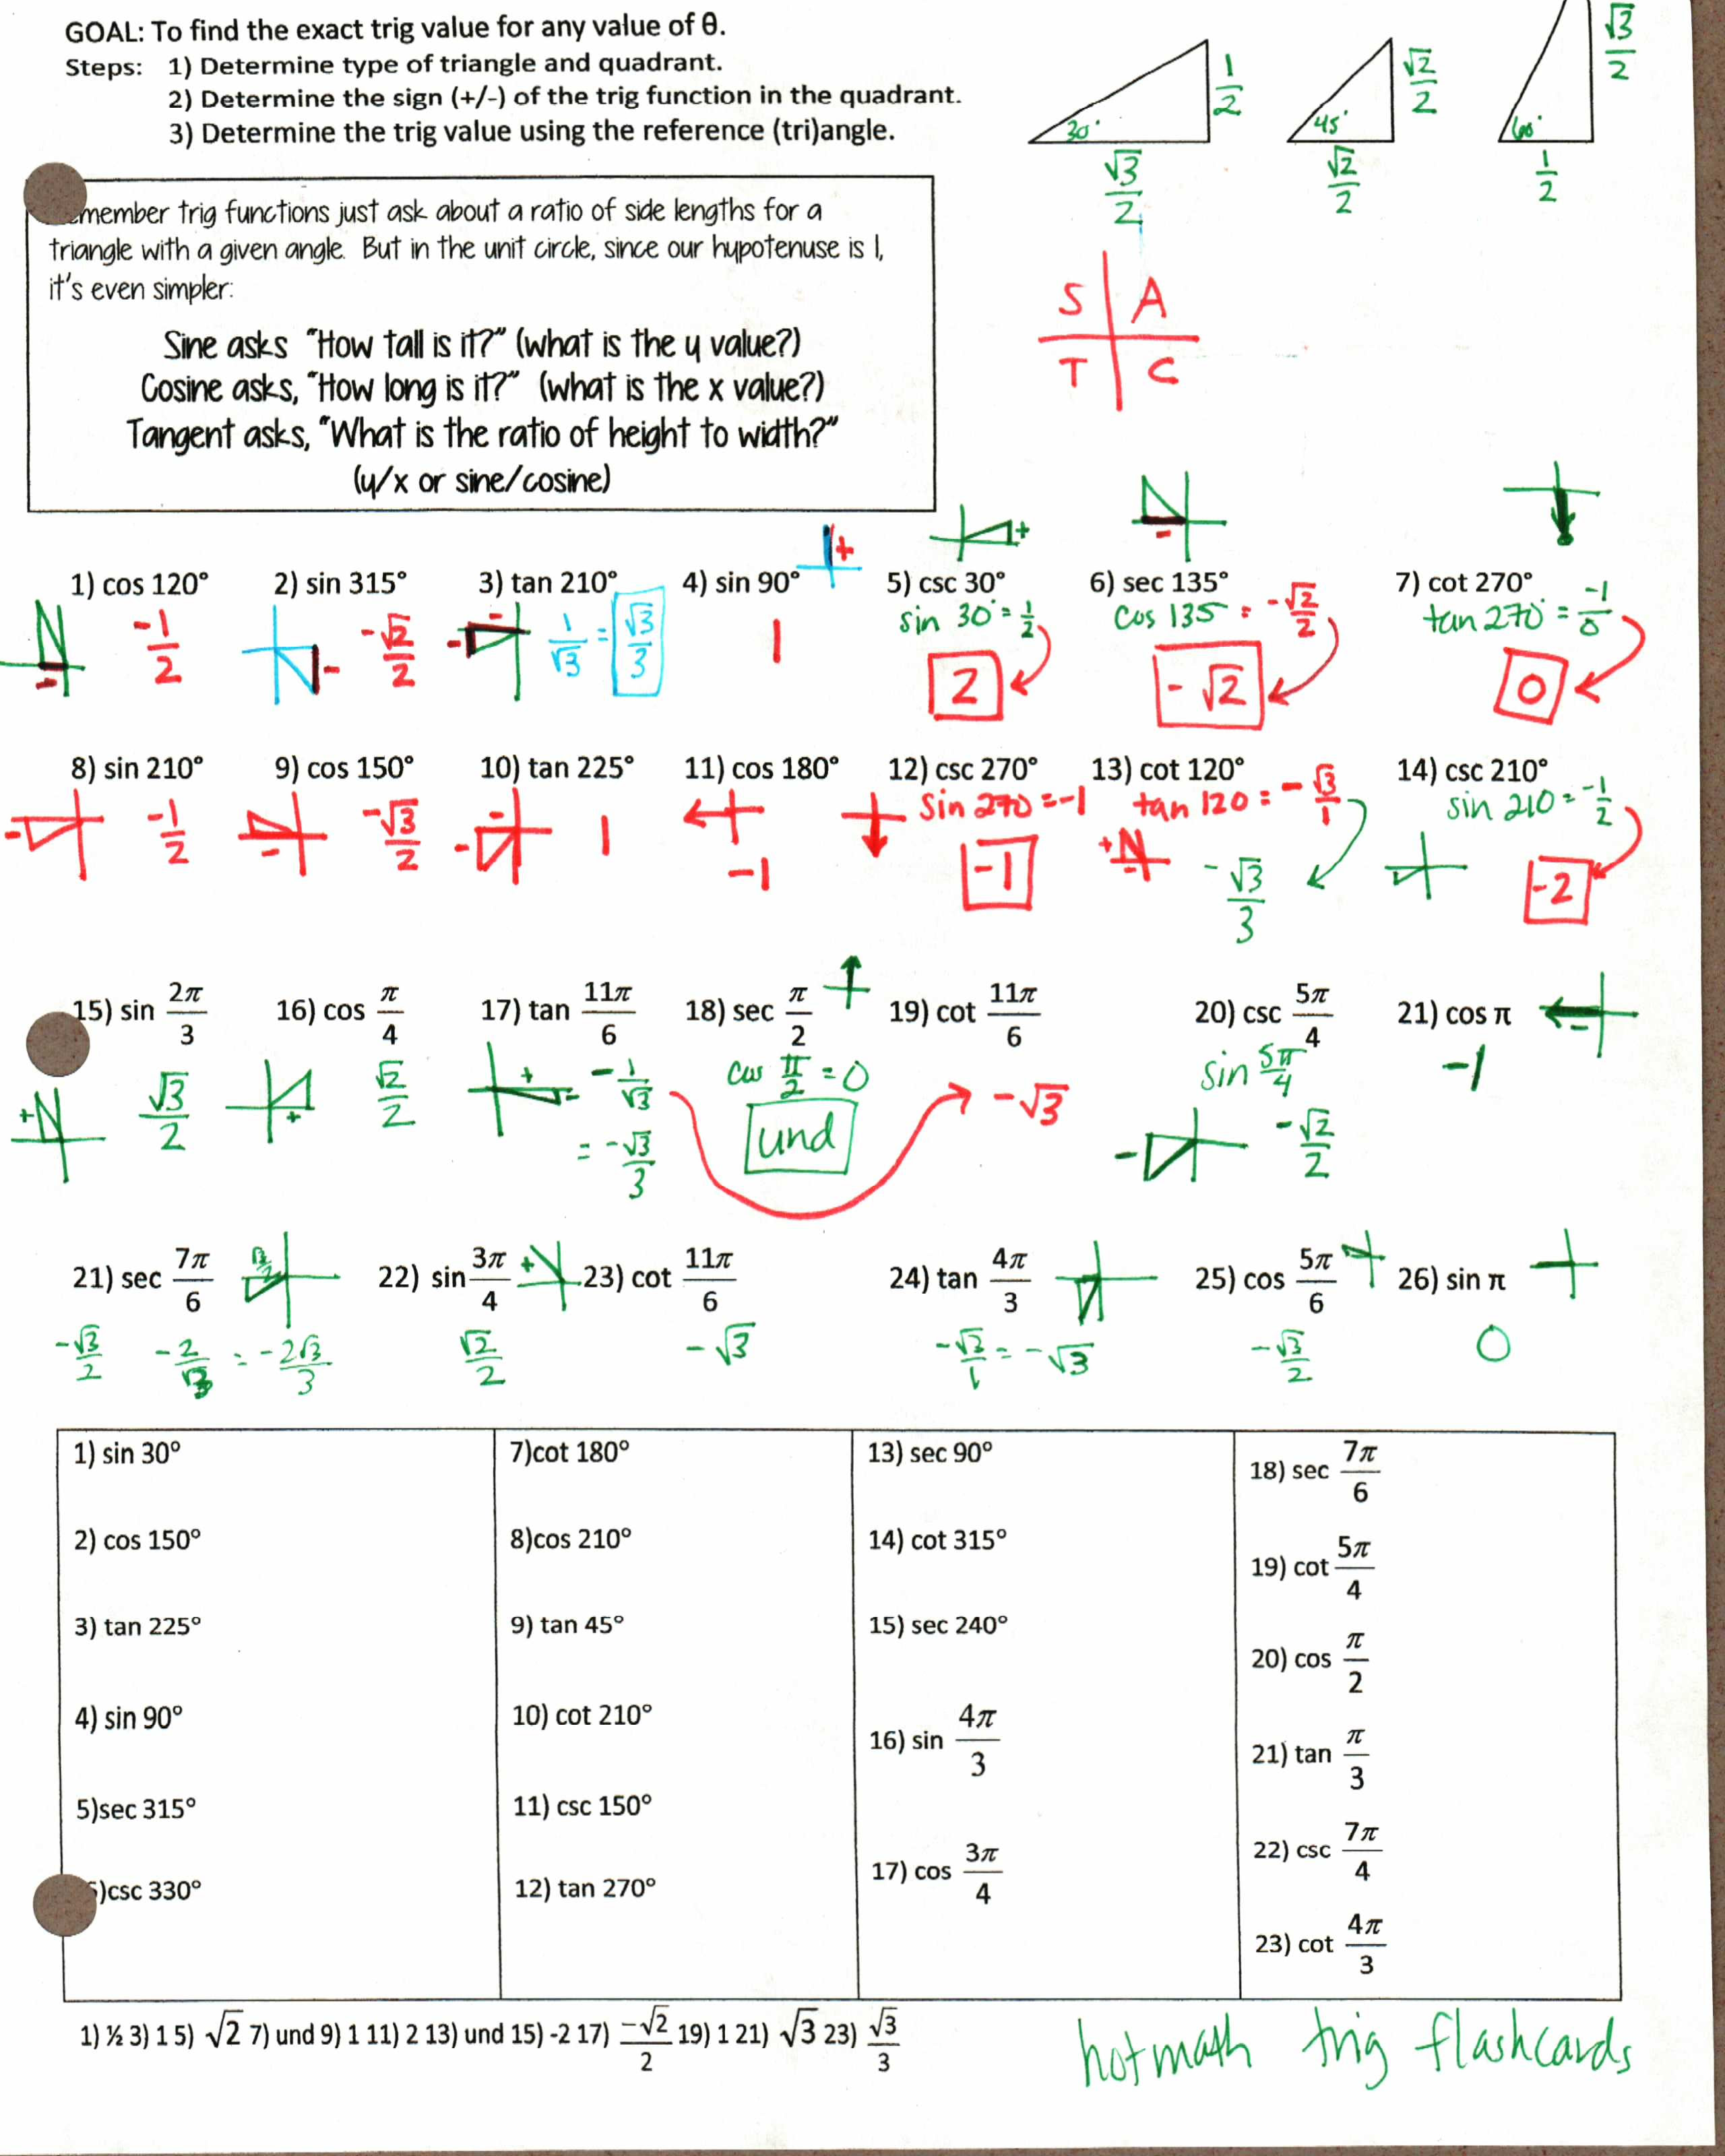 Trigonometry Unit Circle Worksheet Answers - Nidecmege With Trigonometry Unit Circle Worksheet Answers